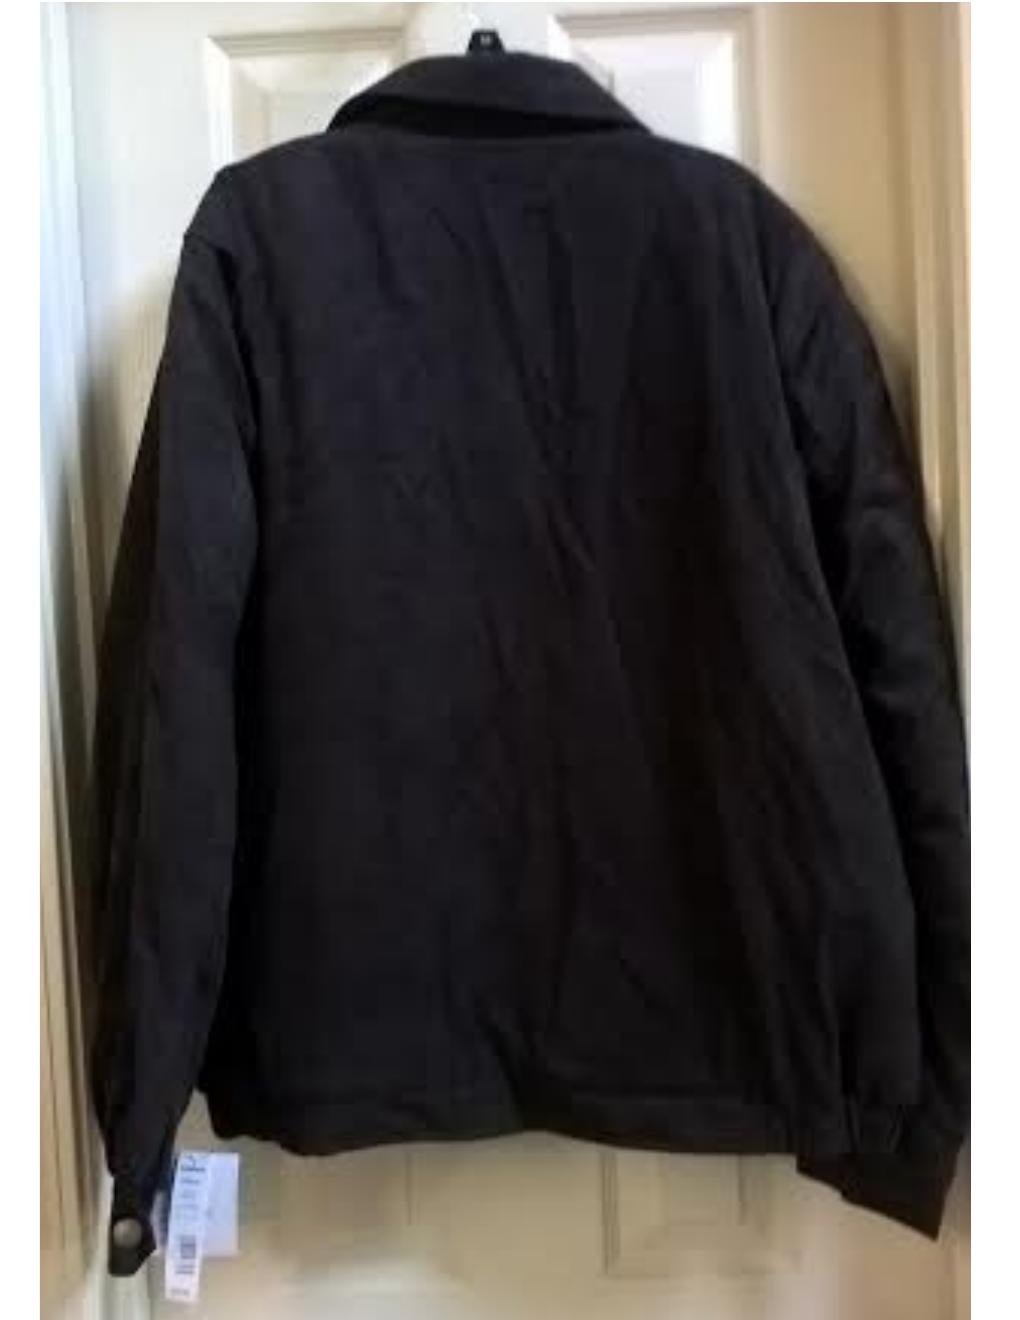 Mens Brown Croft & Barrow Microfiber Jacket or Coat Size Medium M NEW